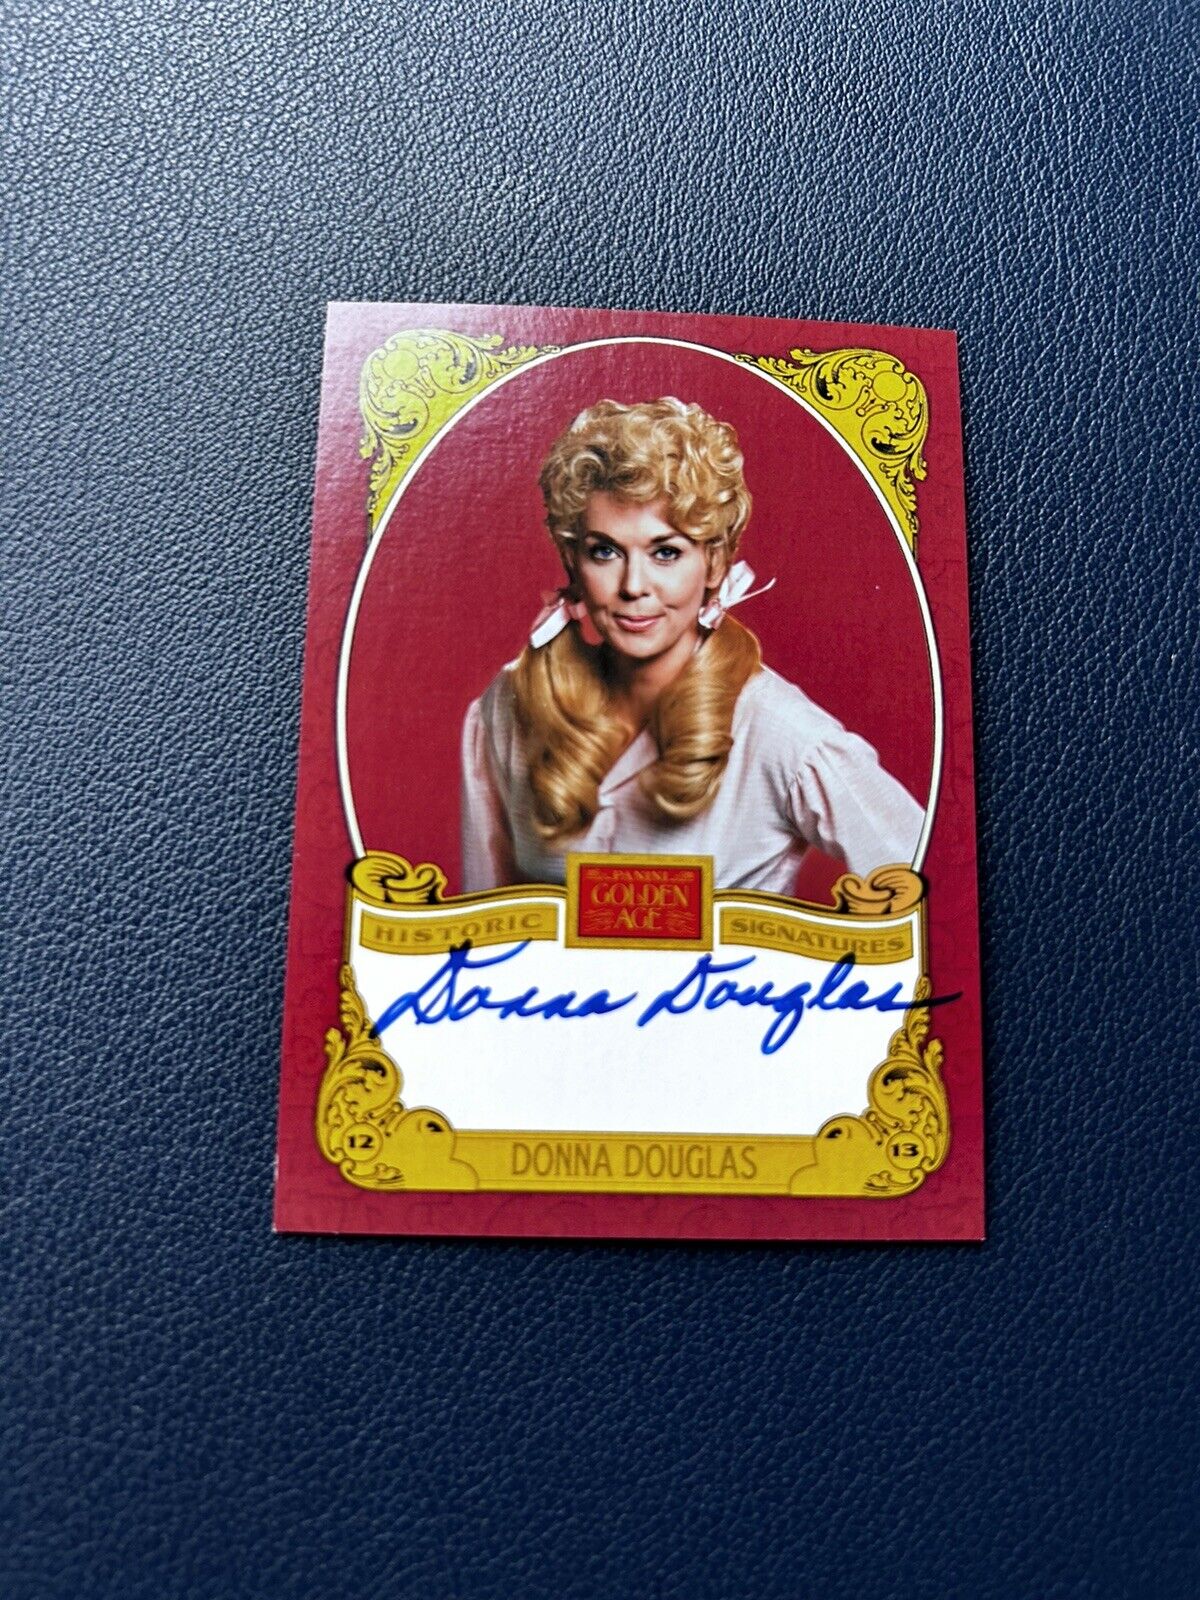 Donna Douglas 2013 Panini Golden Age Autograph auto card  Beverly Hillbillies